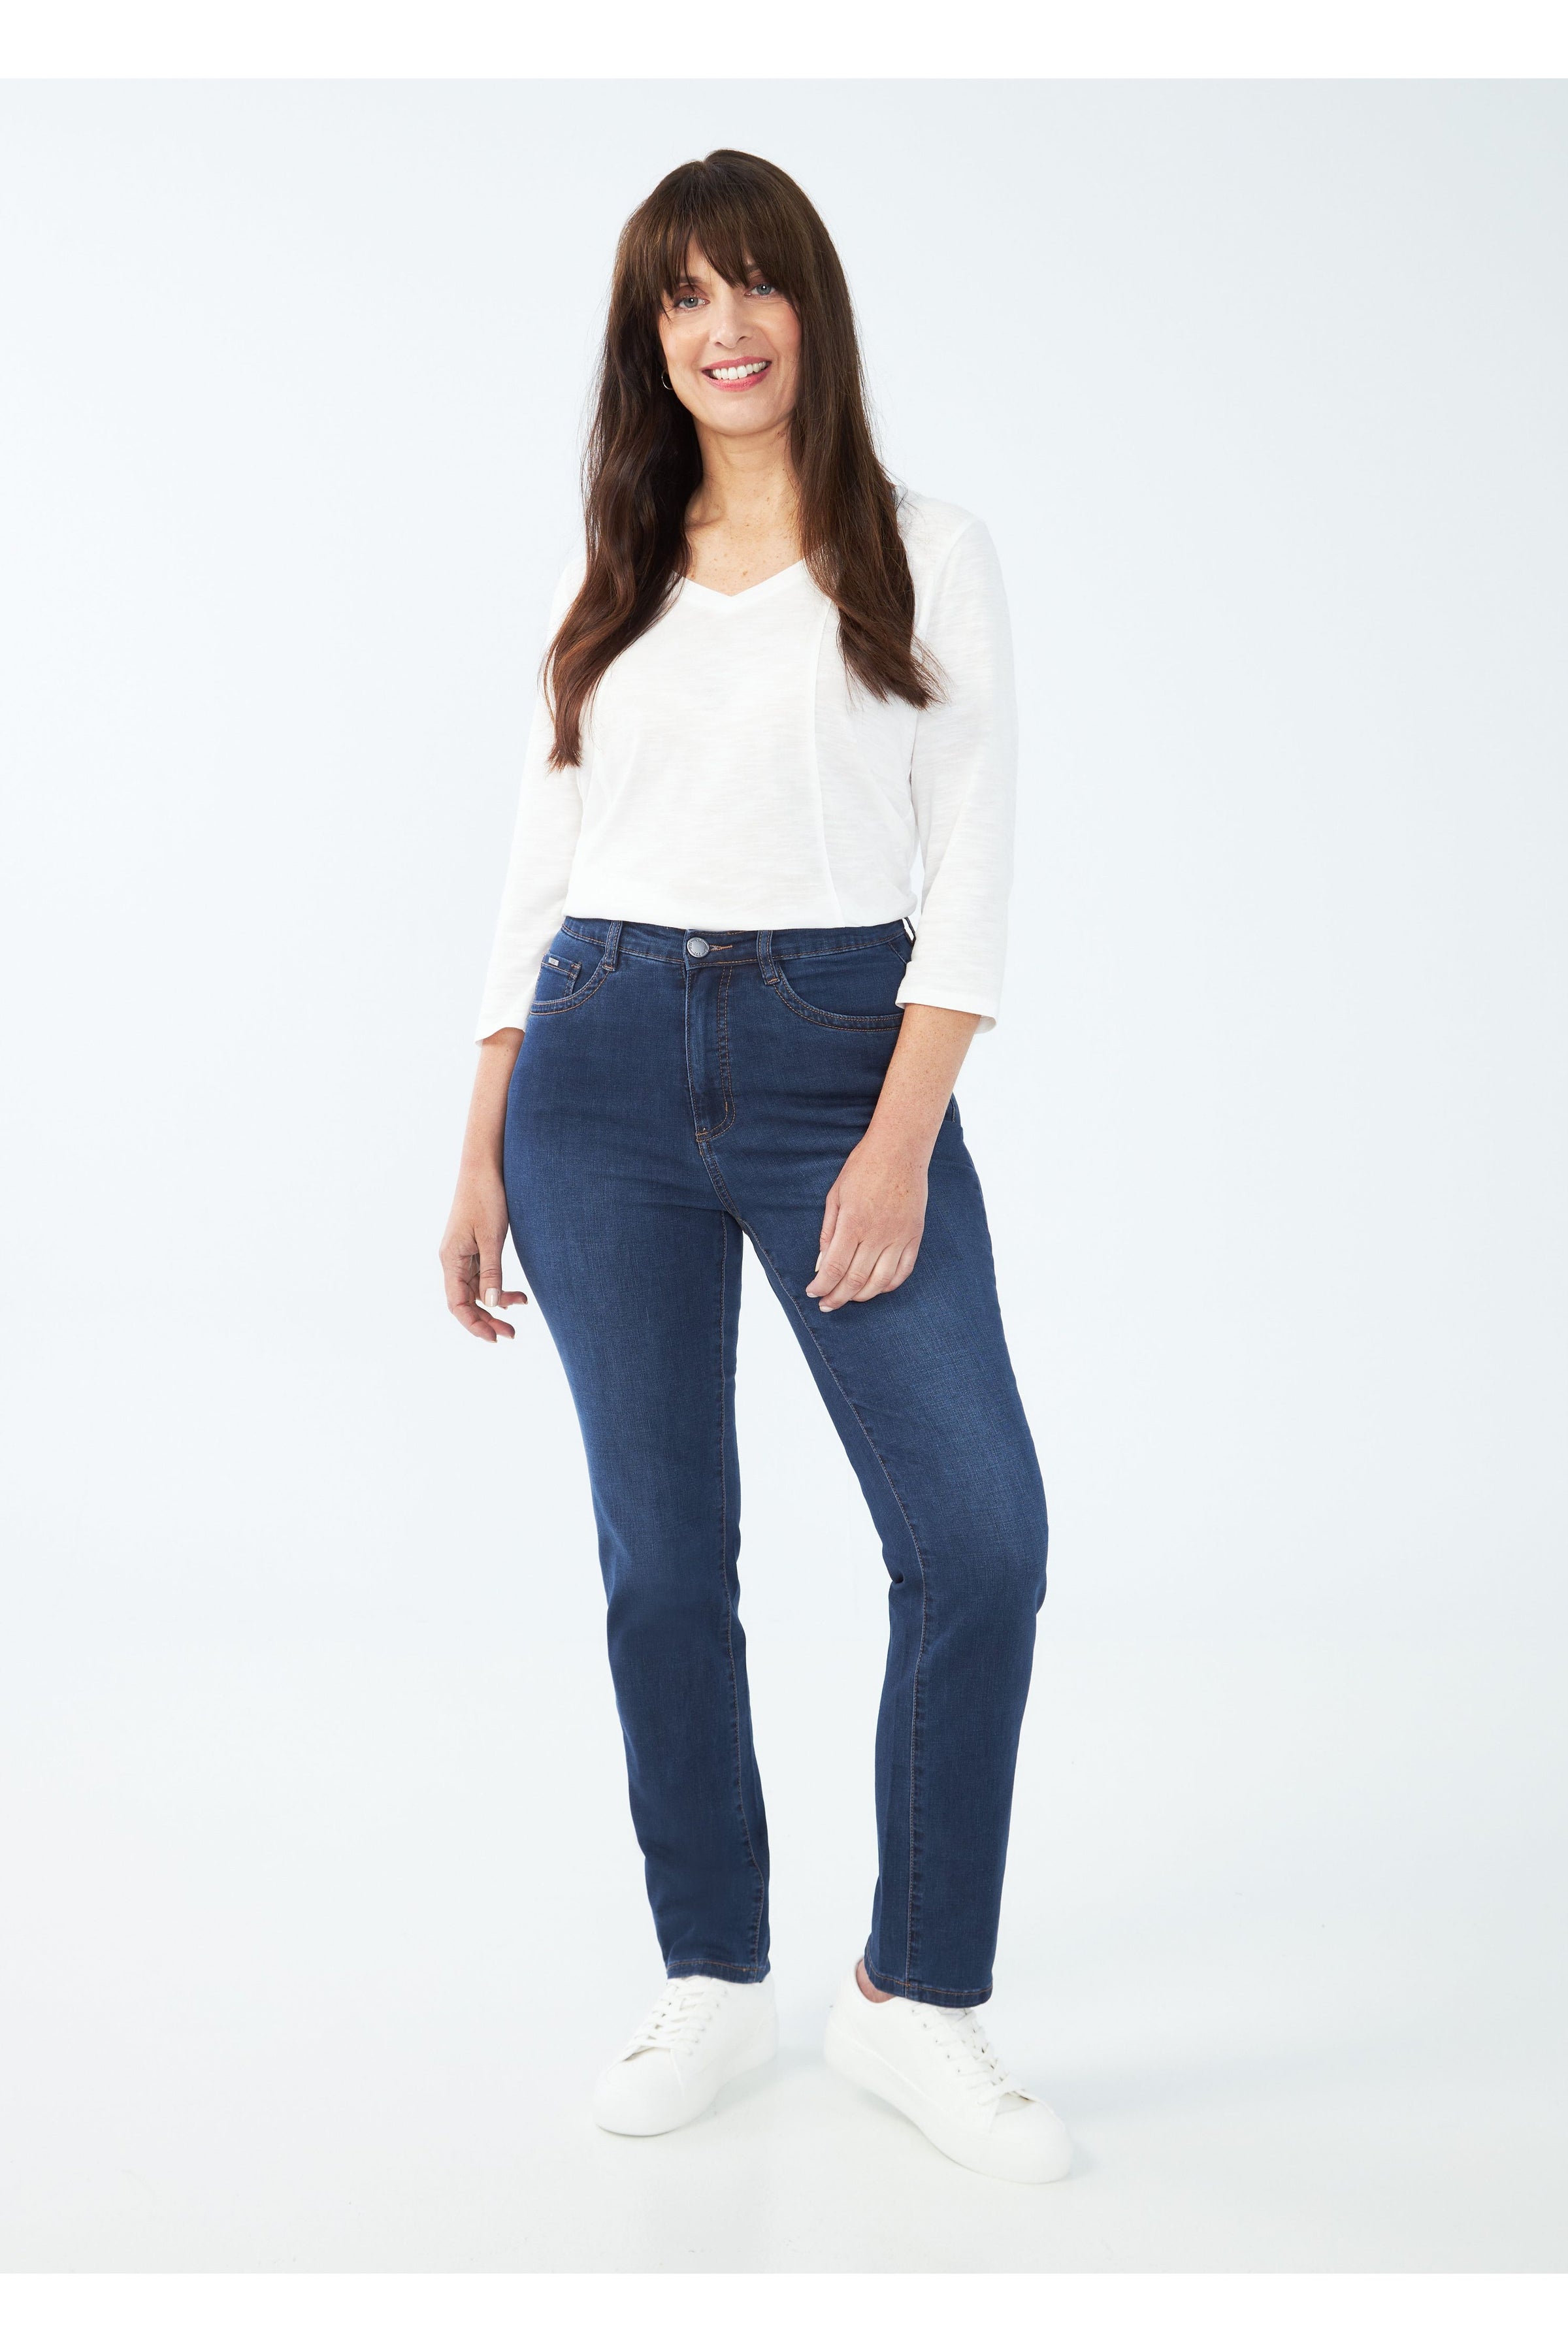 FDJ Petite Suzanne Slim Leg Jean - Style 8473250, front2, delight